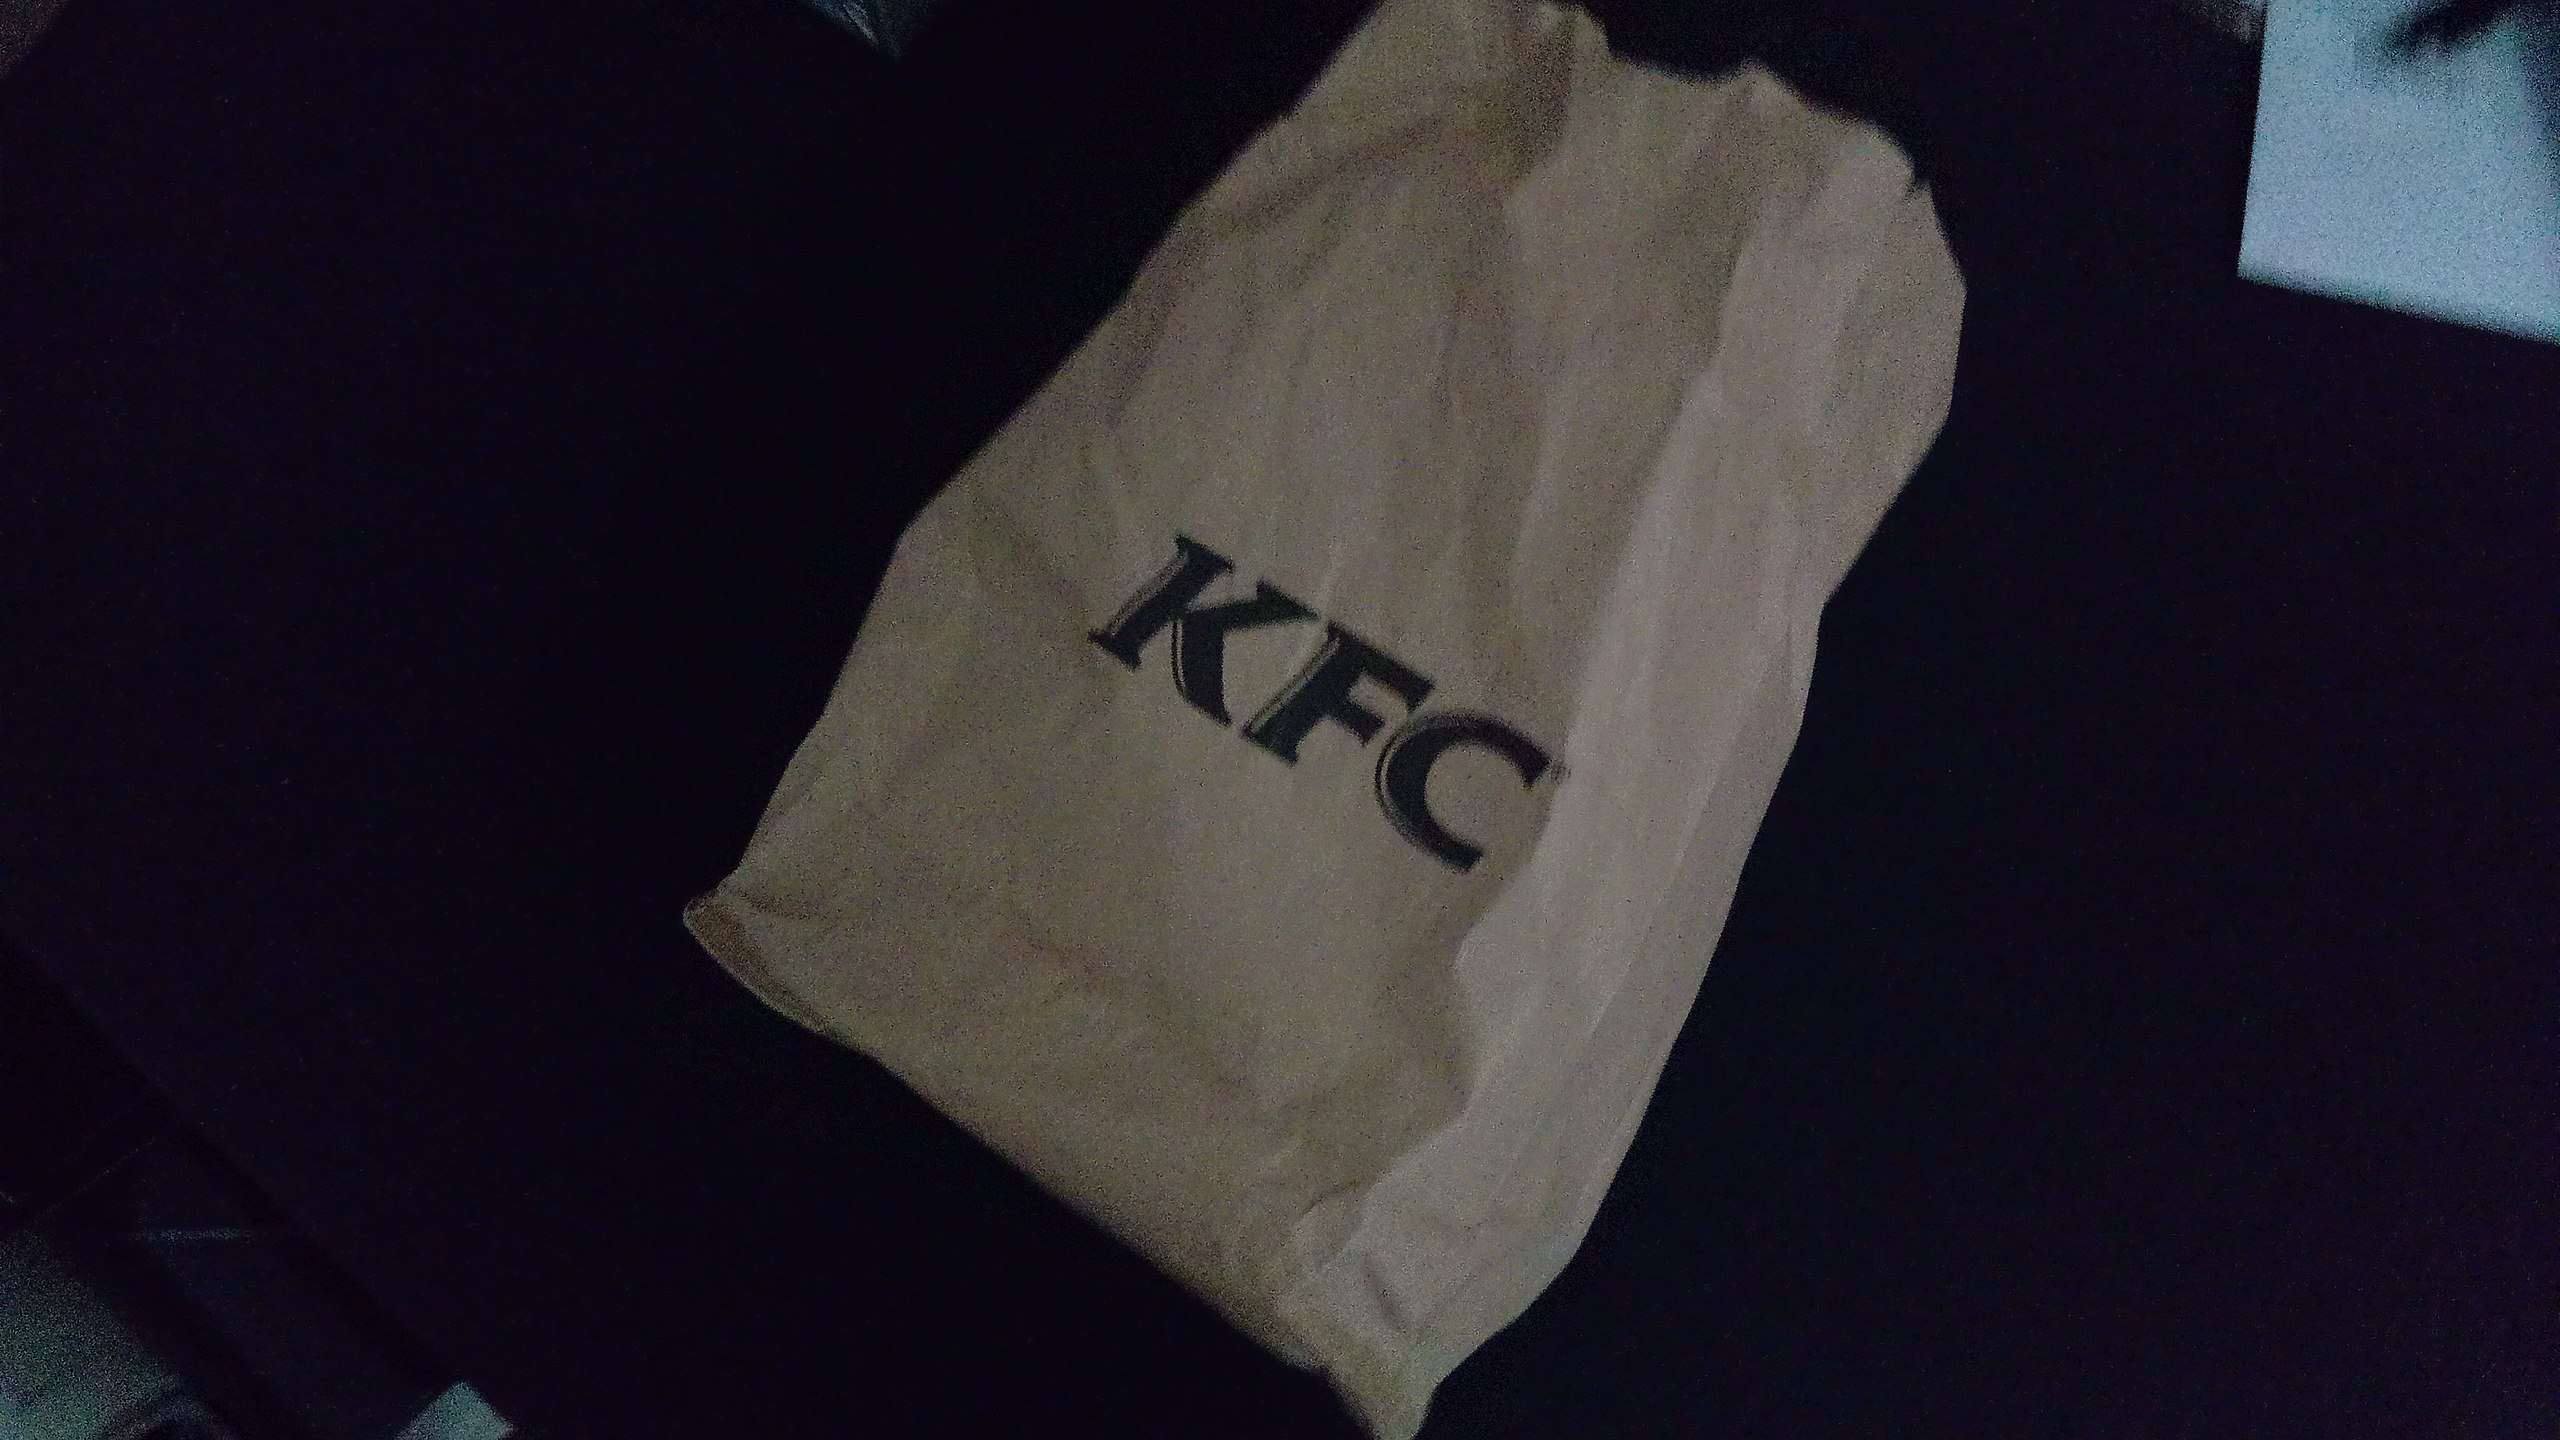 File:KFC paper bag, Winschoten (2019) 02.jpg - Wikimedia Commons